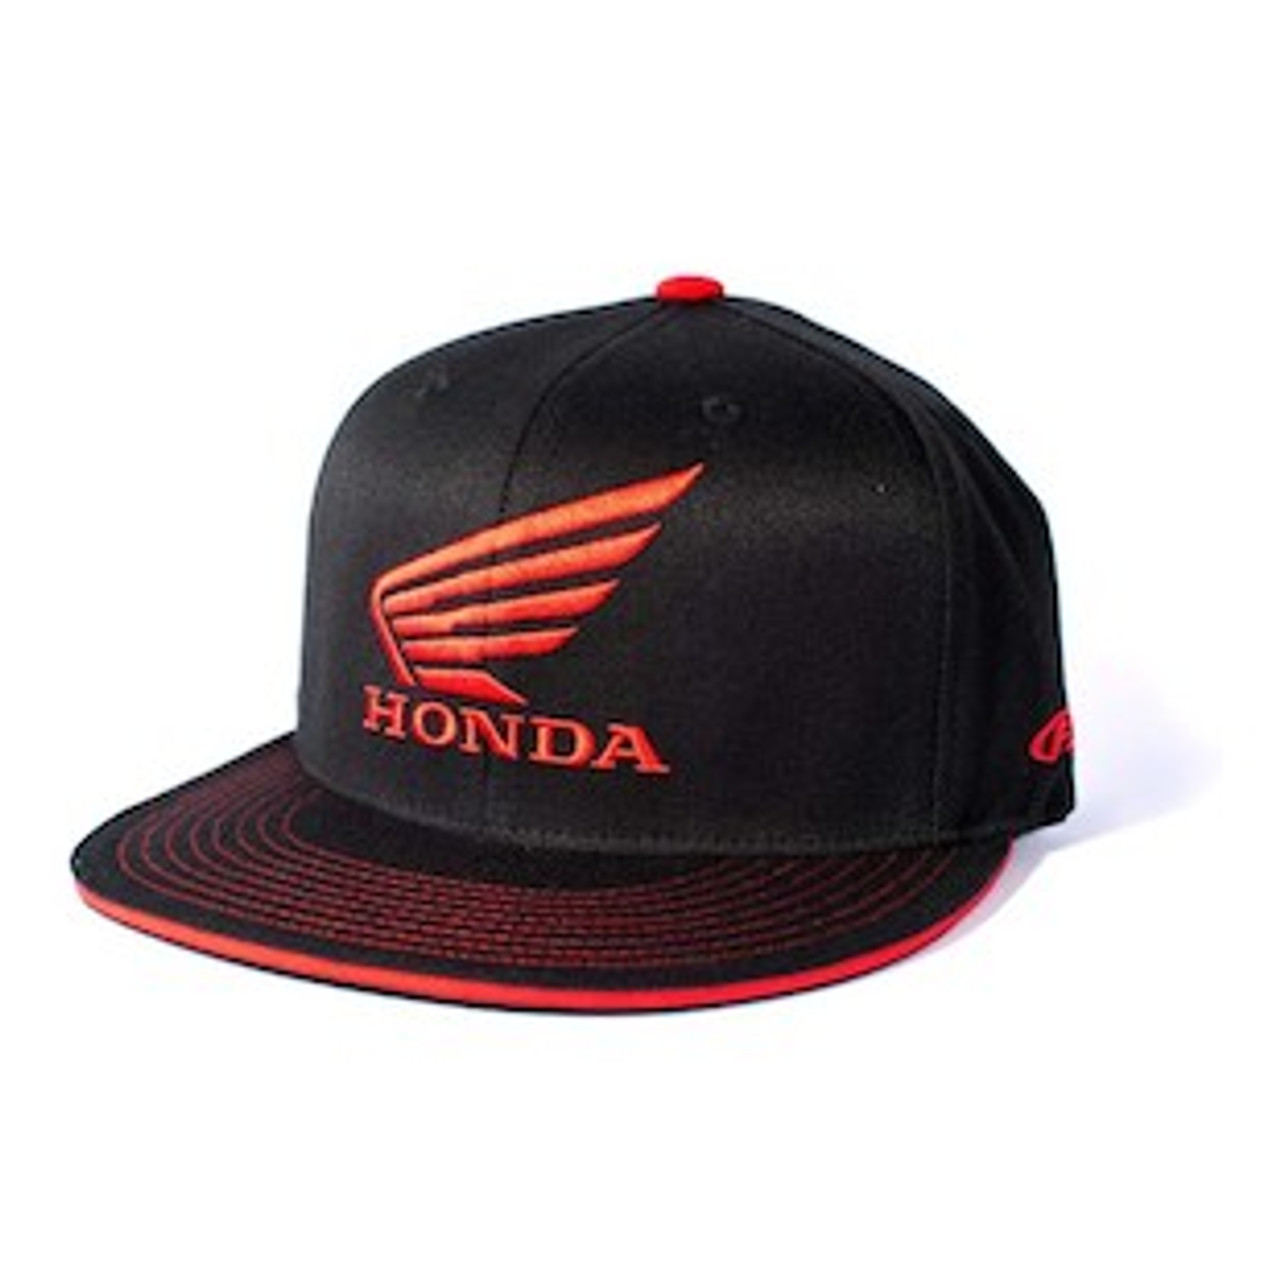 Factory Effex Honda Wing - of Preformance Cycle Hat|Baseball Cap Hat|Honda Colorado Flexfit